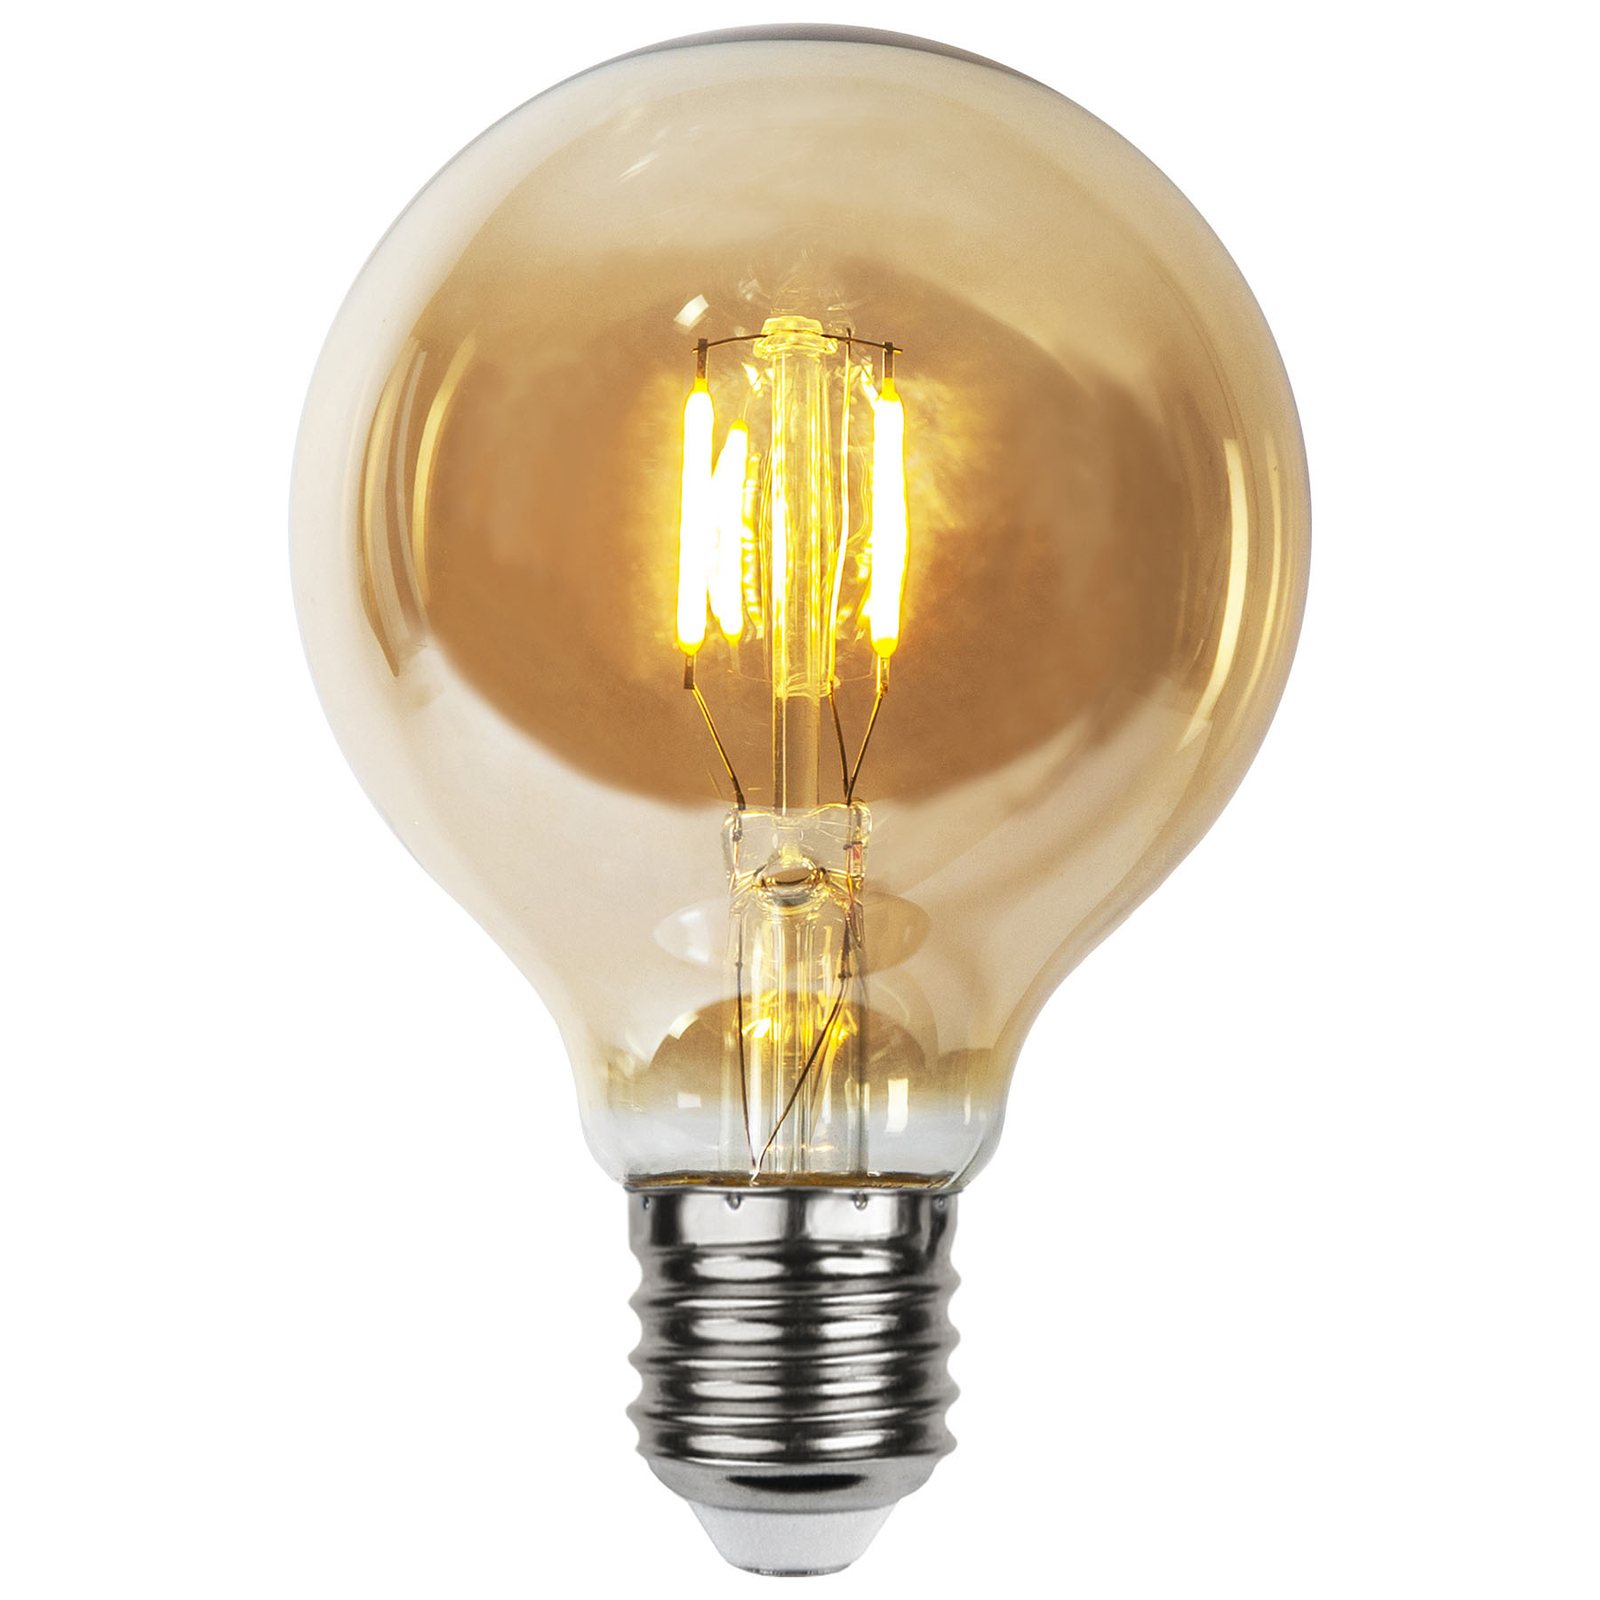 repeat Conquest count LED bulb E27 0.23 W G80 filament 24 V amber 4-pack | Lights.co.uk